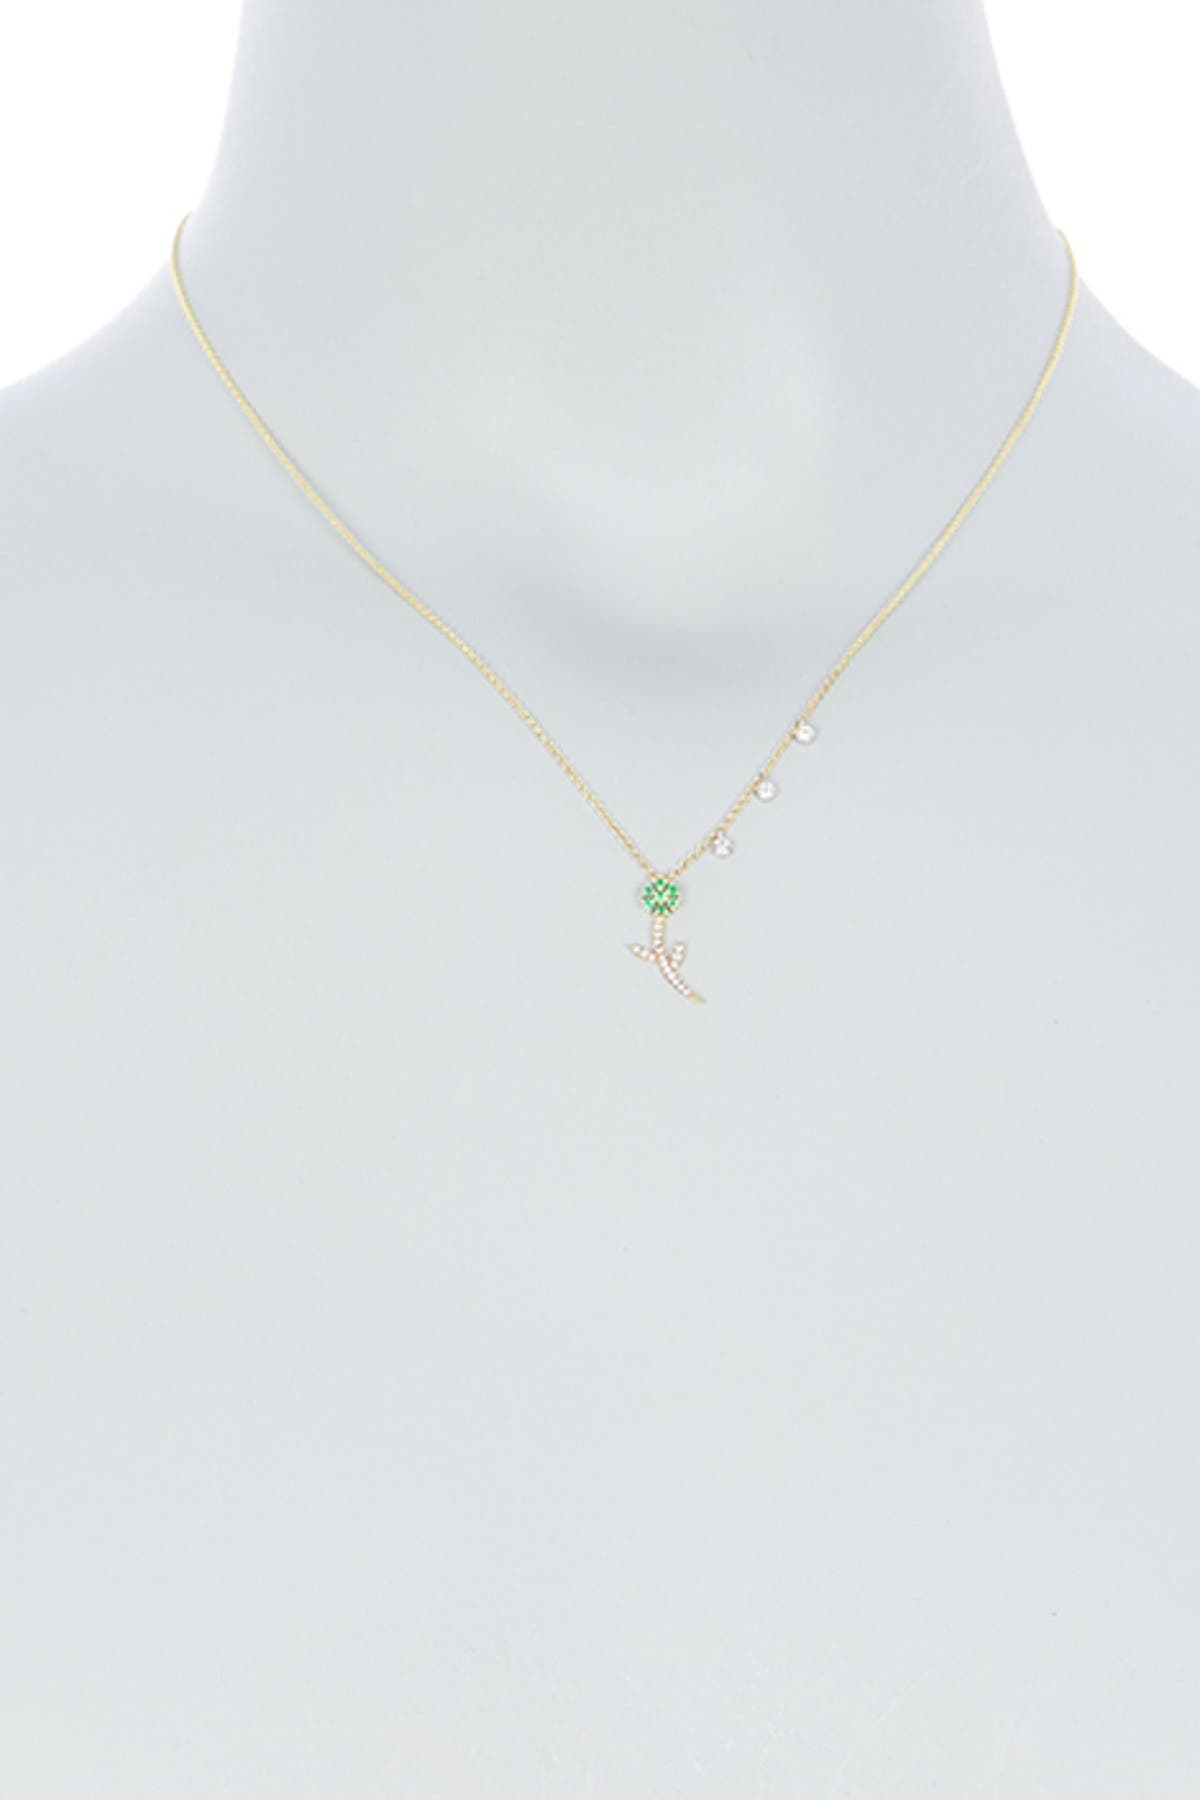 Meira T 14k Yellow Gold Emerald & Diamond Flower Pendant Necklace